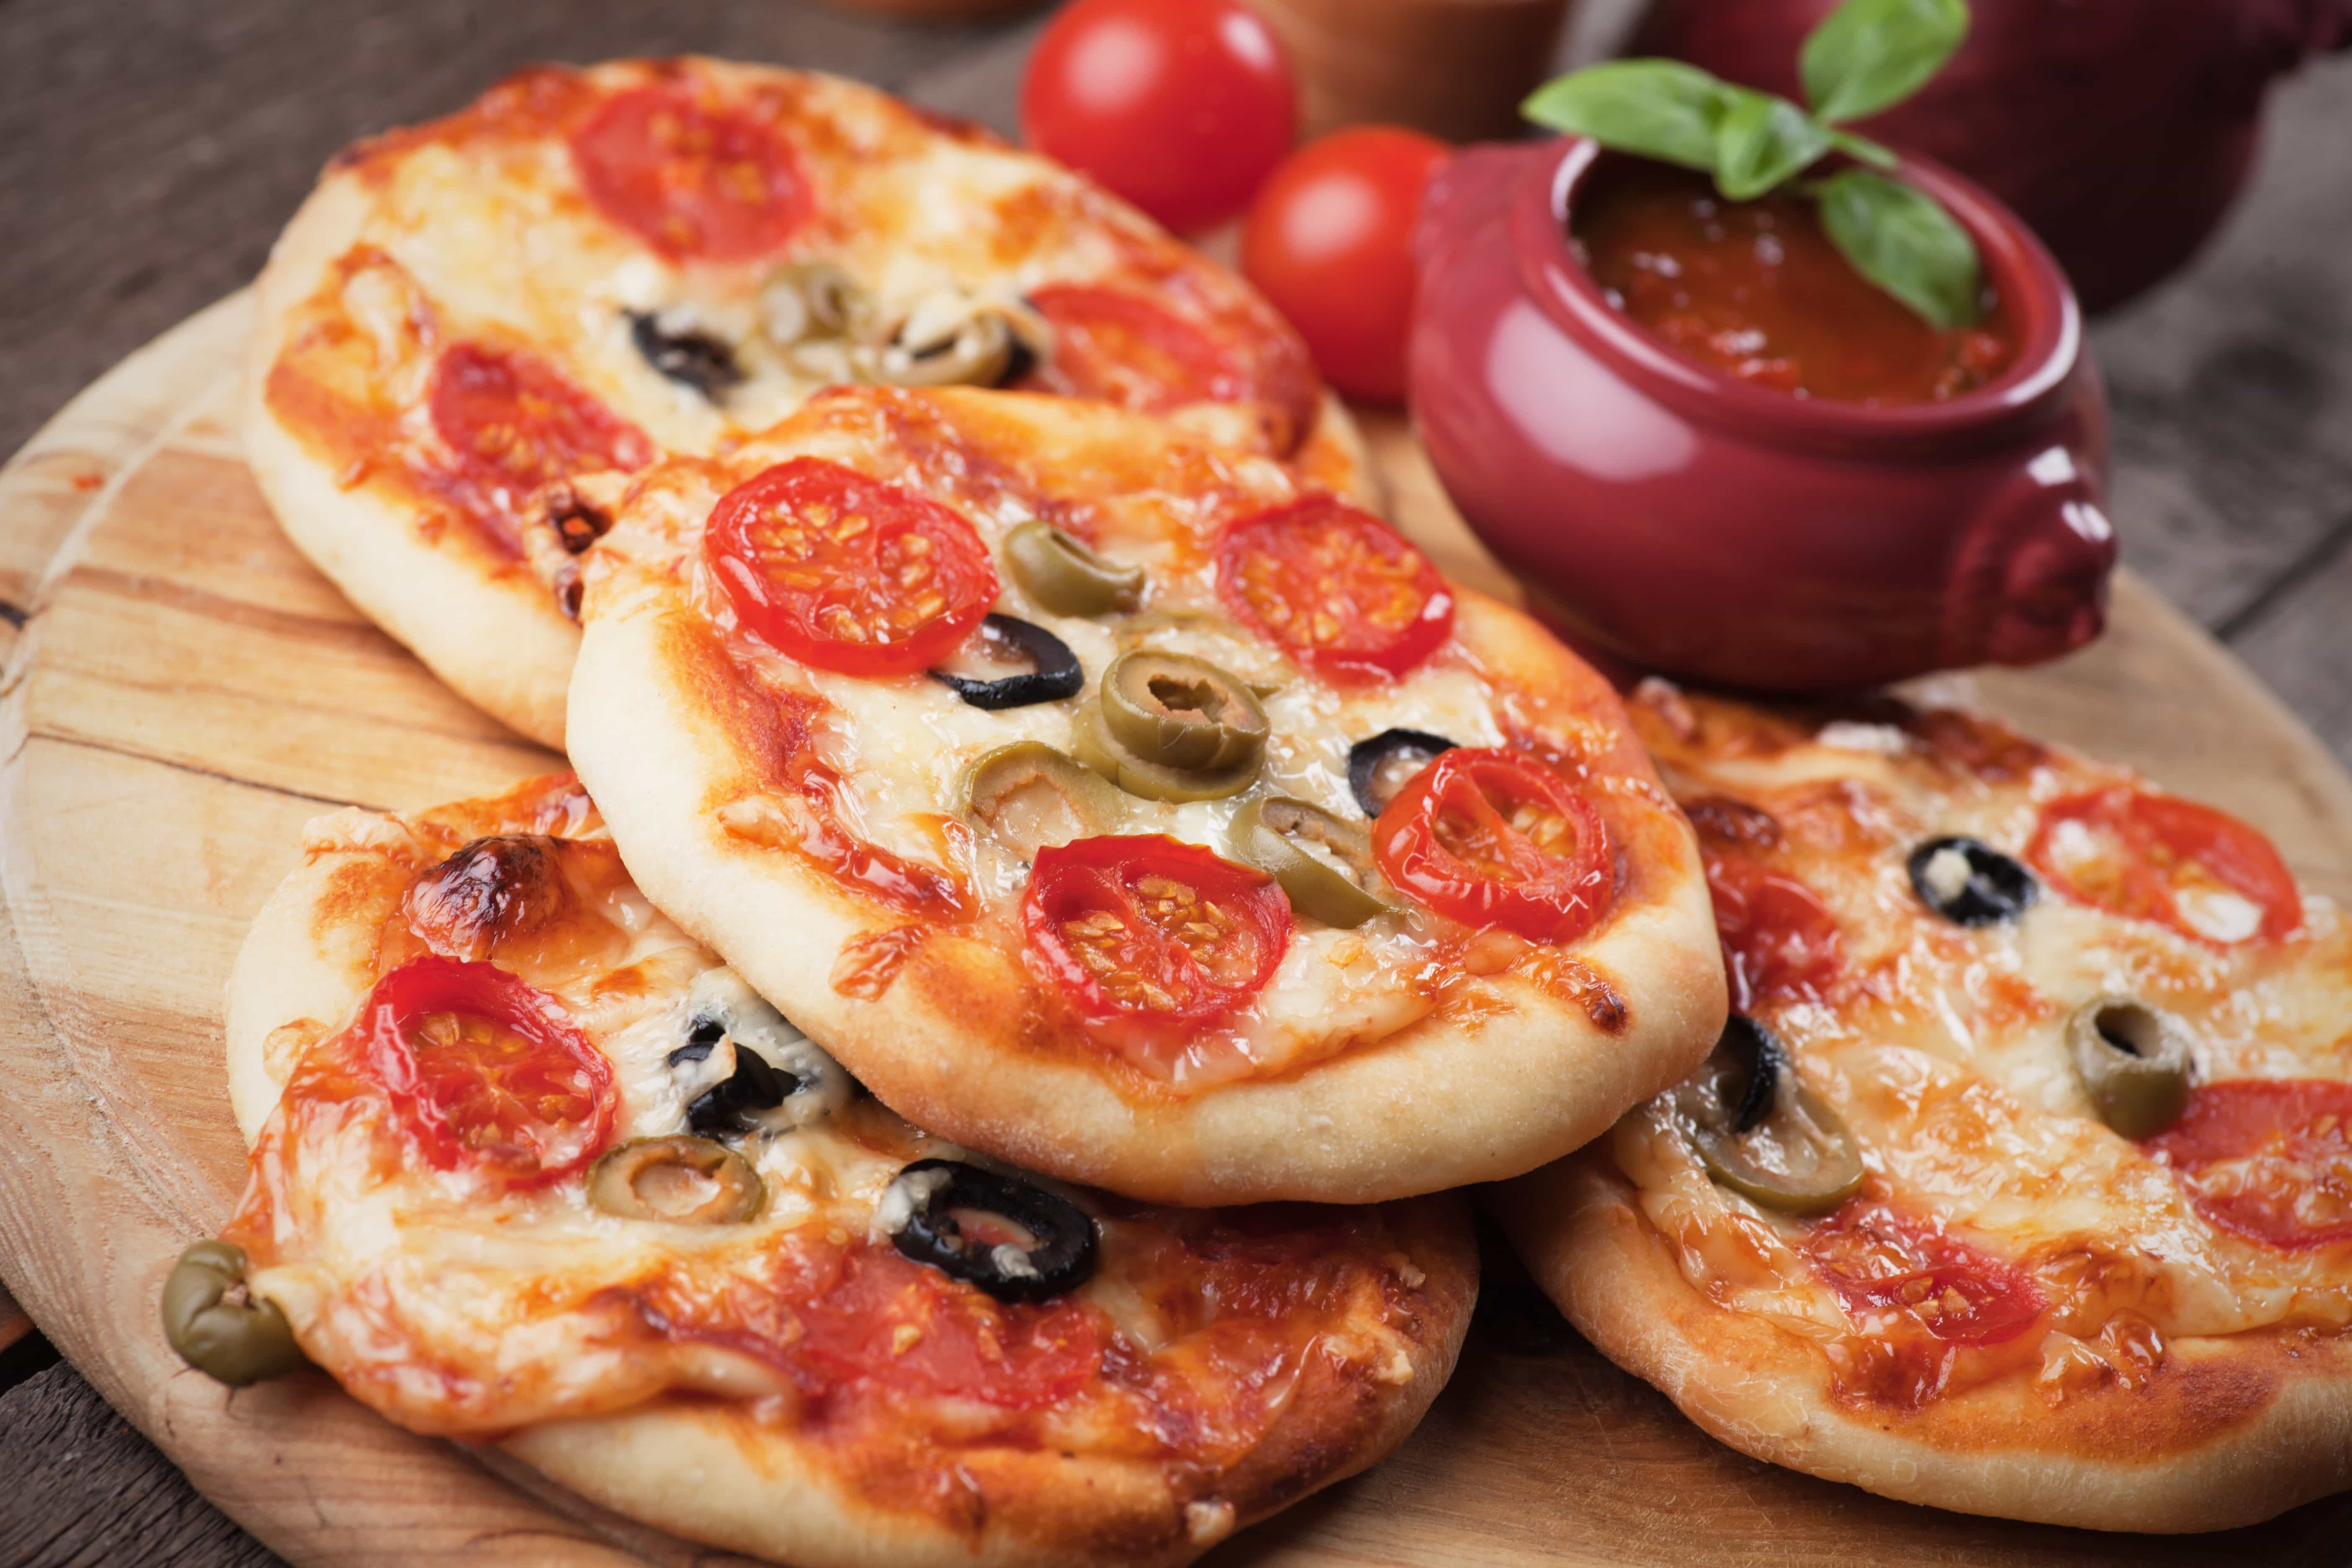 Pizza reaby. Мини пицца пепперони. Пицца маленькая. Красивые мини пиццы. Мини пицца круглая.